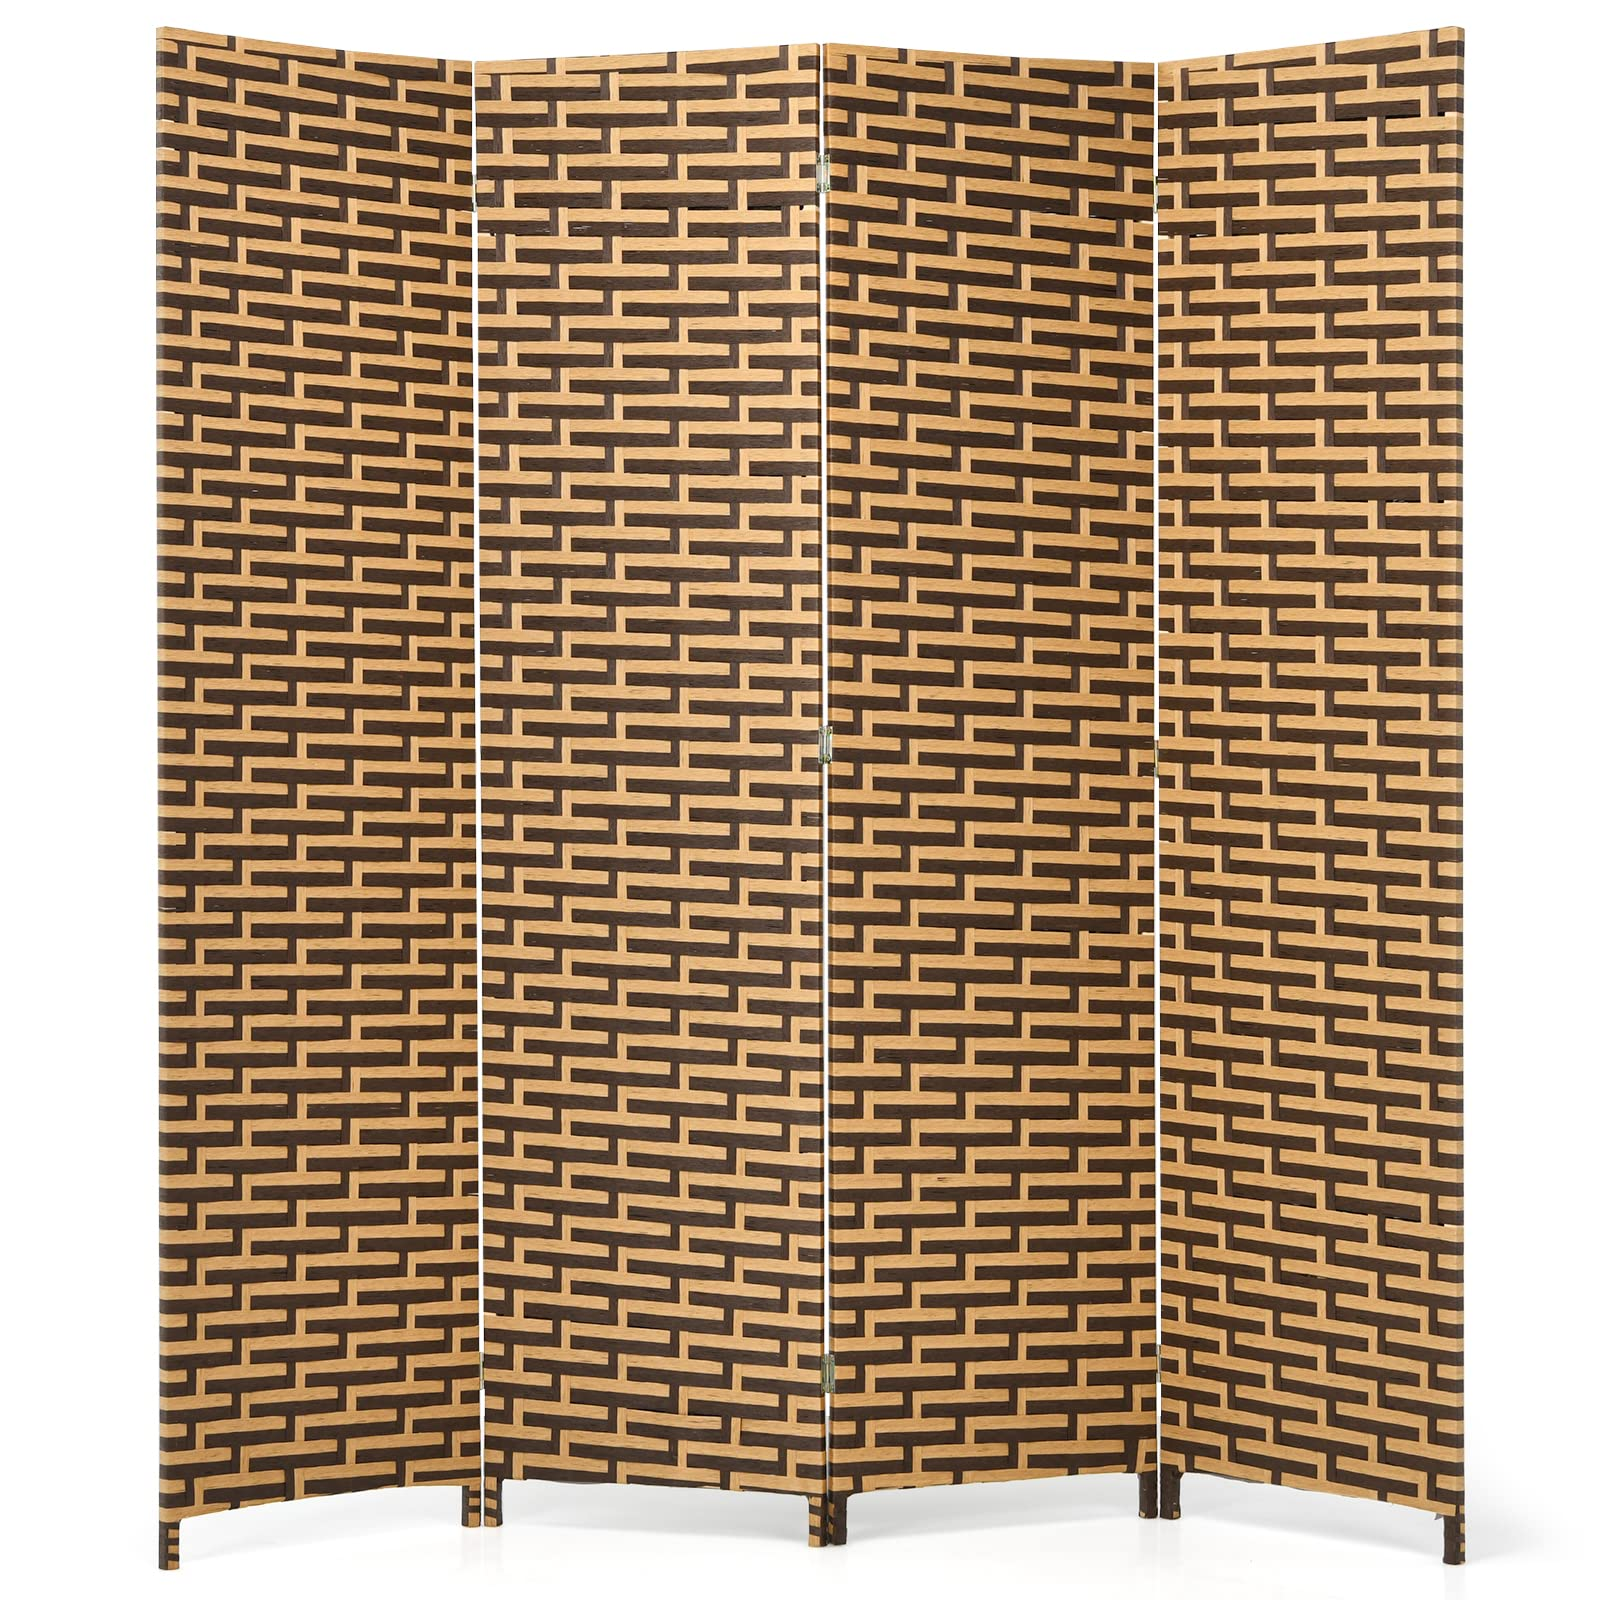 Giantex Room Divider, 6 Ft 4 Panel Handmade Rattan Room Divider